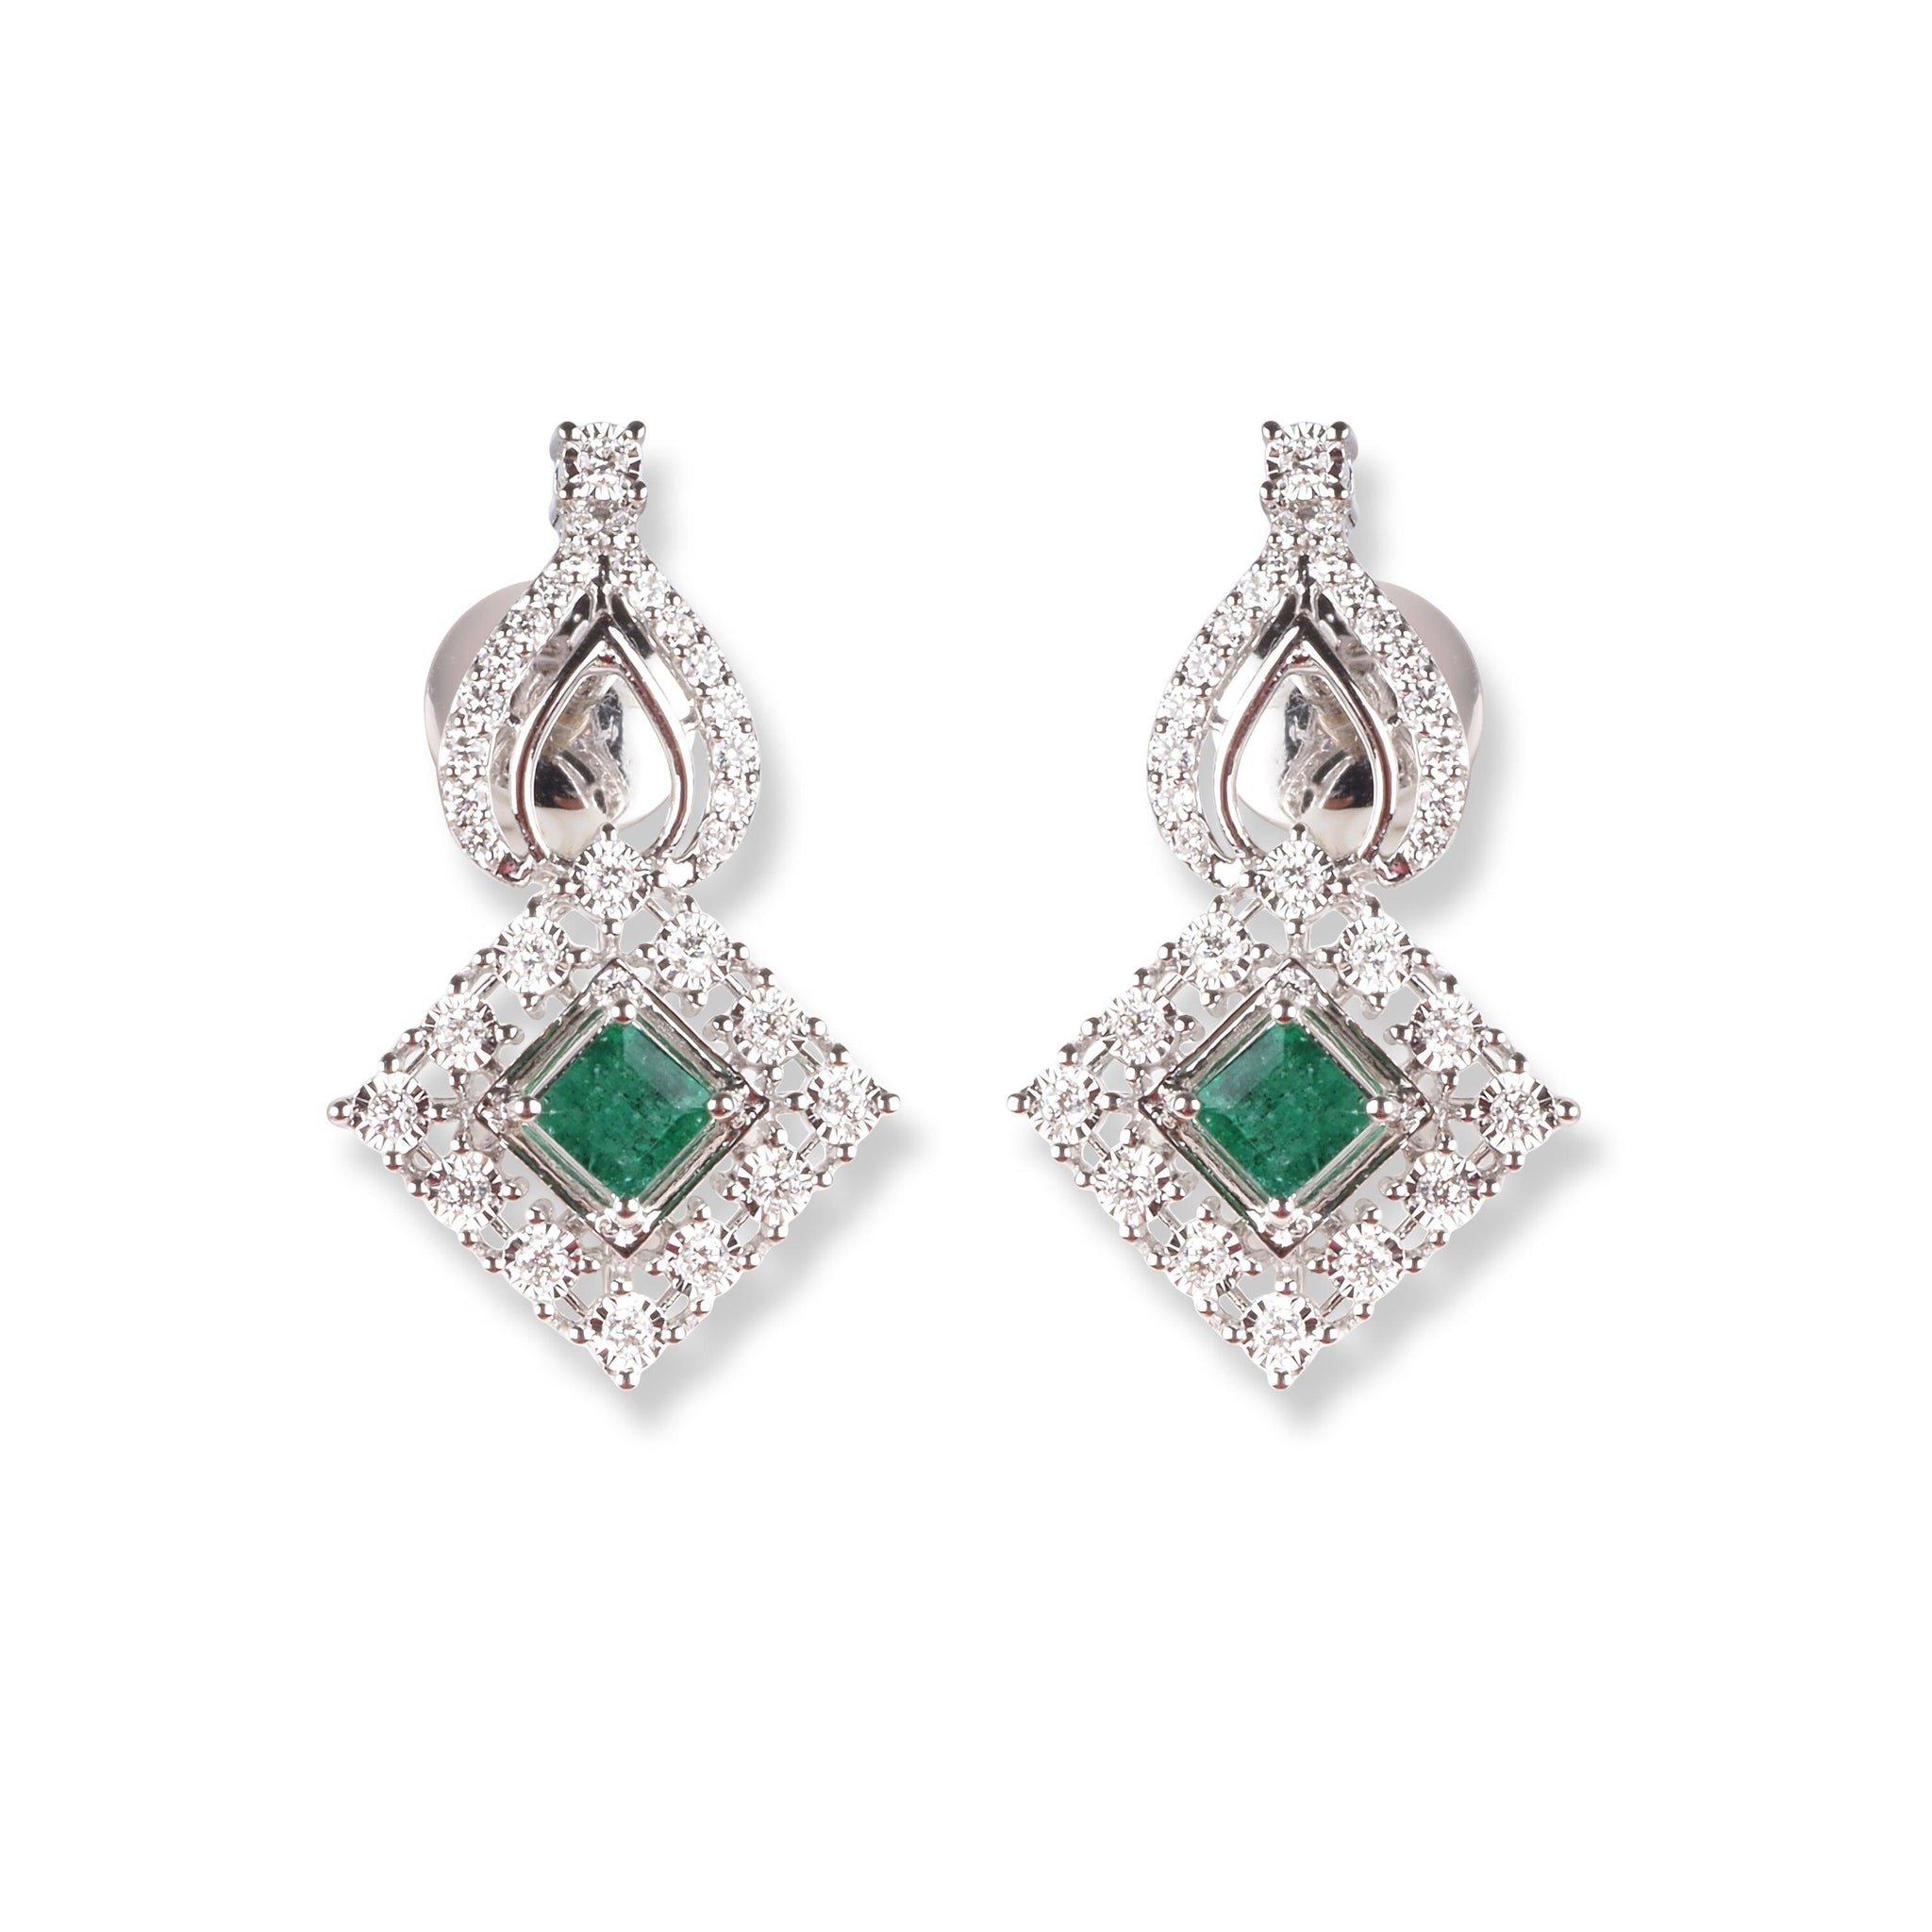 18ct White Gold Diamond & Emerald Set (Pendant + Chain + Earrings) MCS6223/4